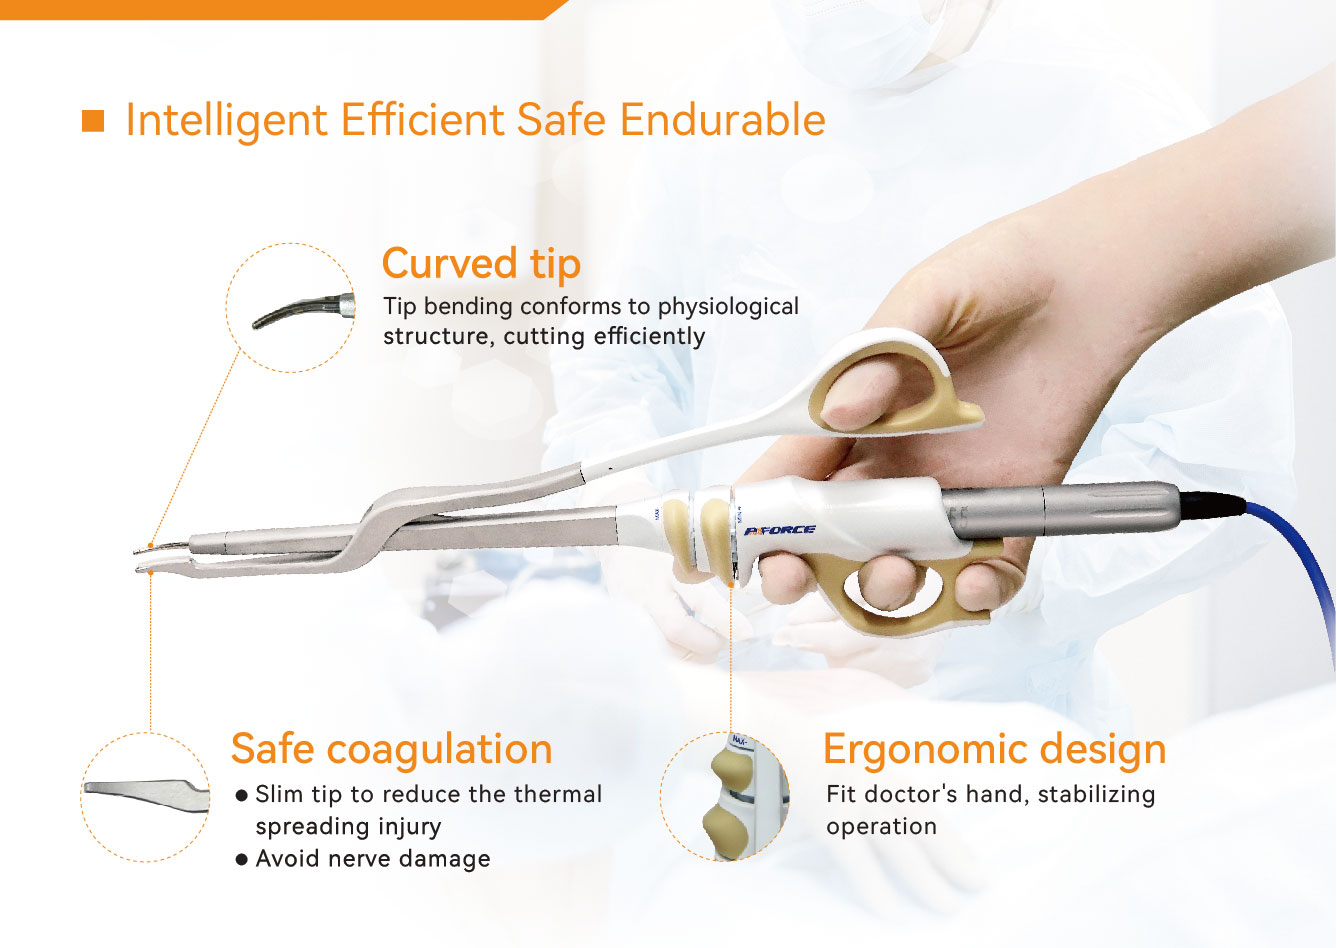 FDA Scissor Type Ultrasonic Surgical Scalpel features